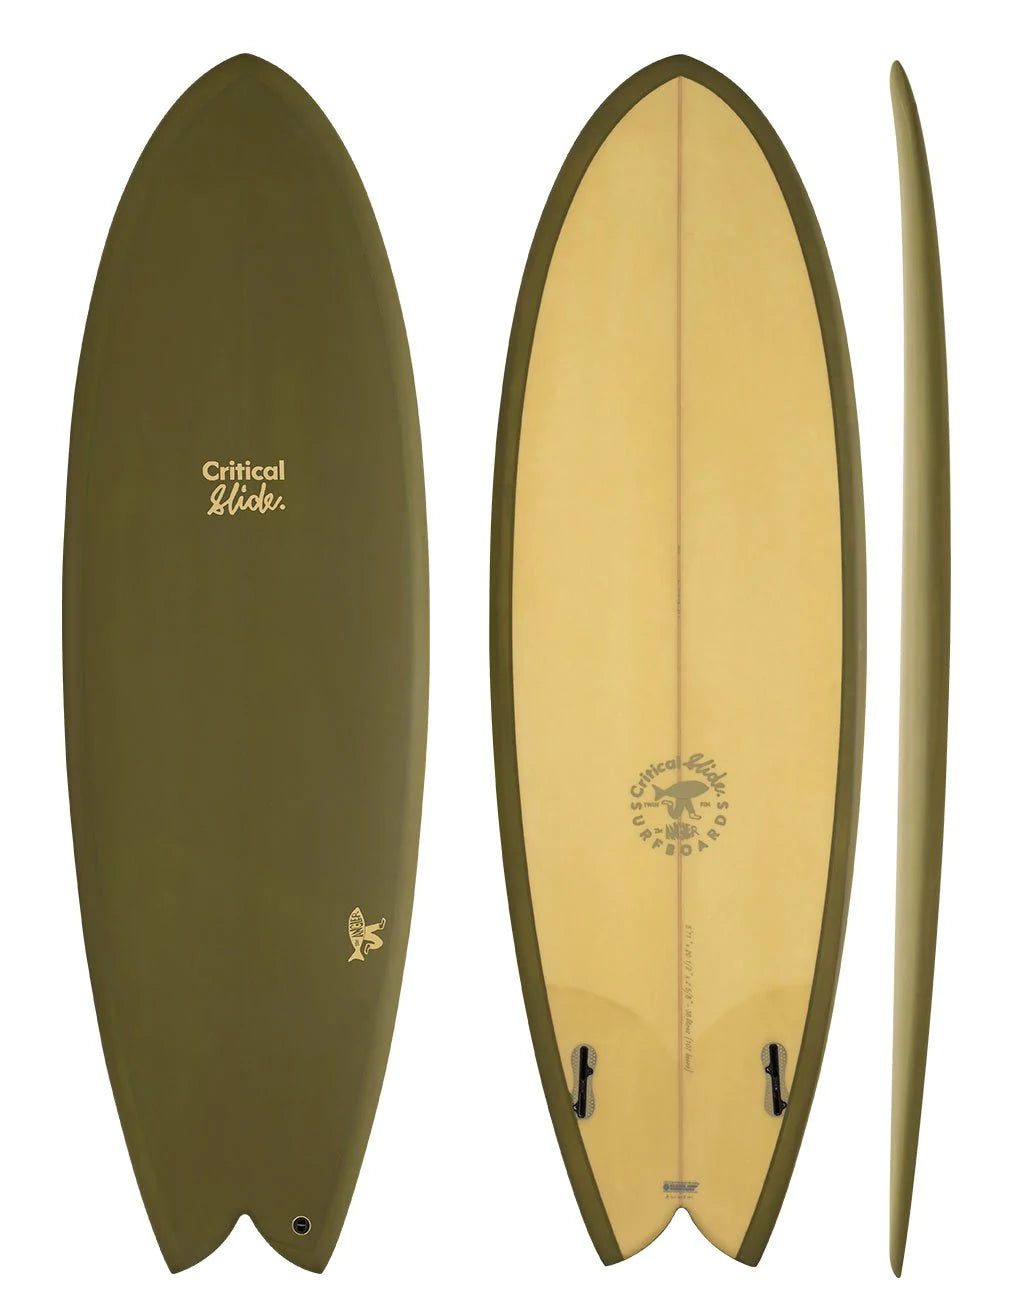 The Critical Slide Society Surfboards Angler - artichoke colored twin fin surfboard